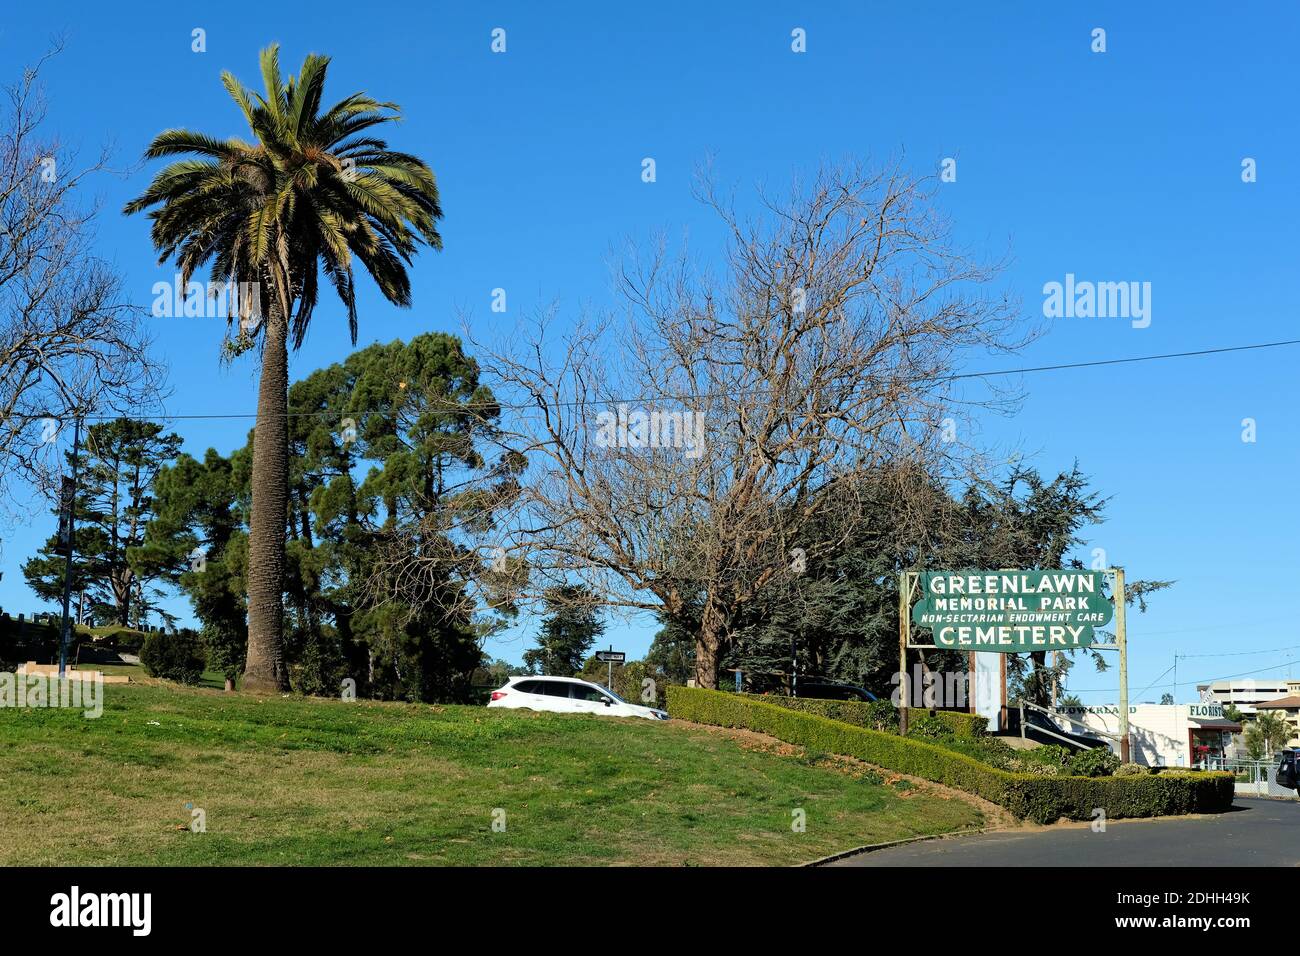 Greenlawn Memorial Park, founded in 1904; cemetery in Colma, California, USA. Stock Photo